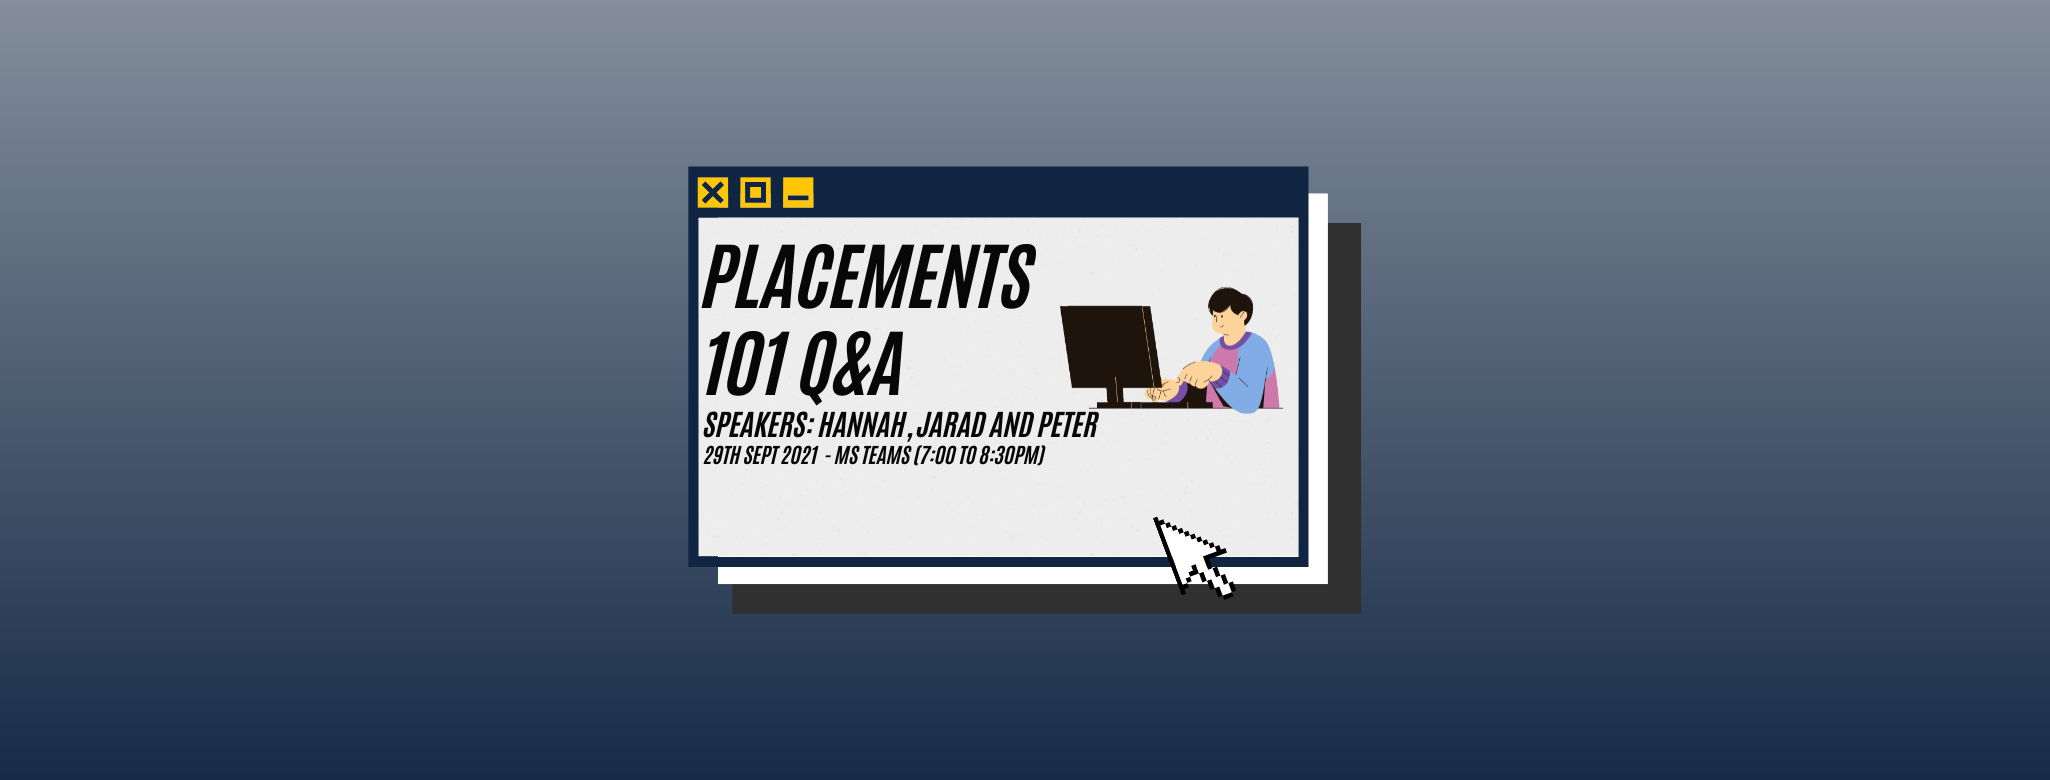 Placement 101 Q&A Banner